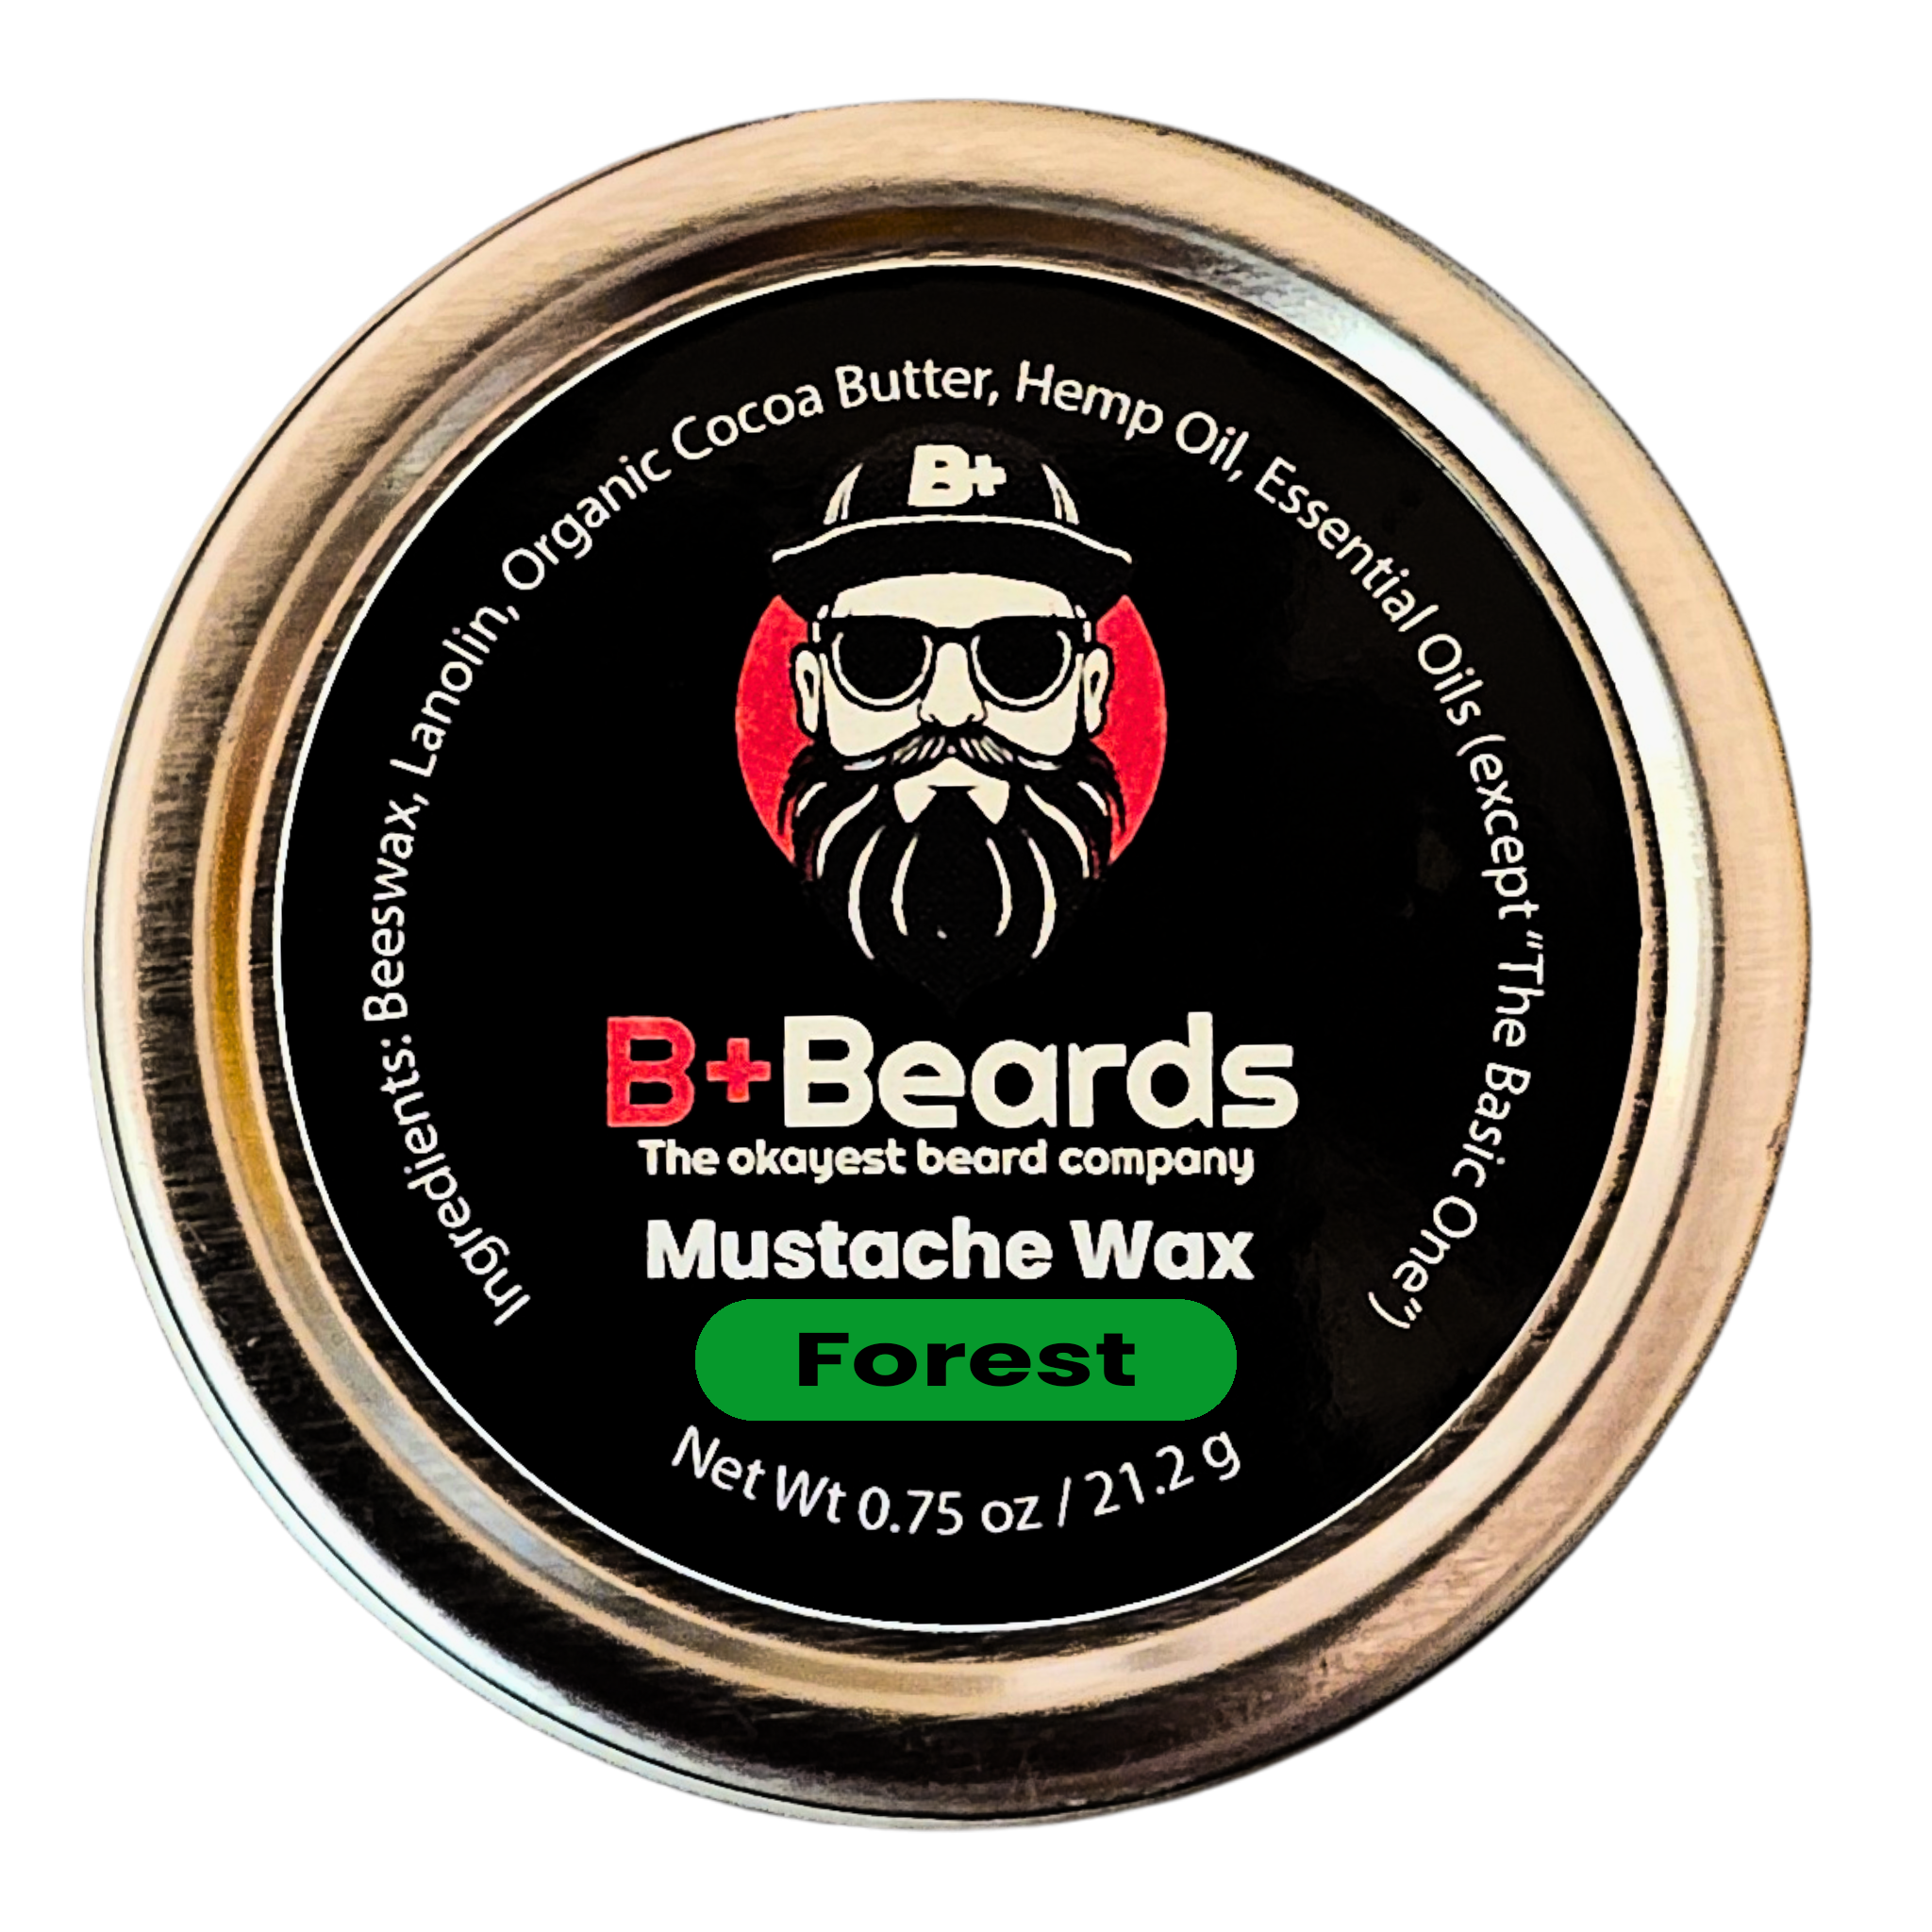 Forest Mustache Wax